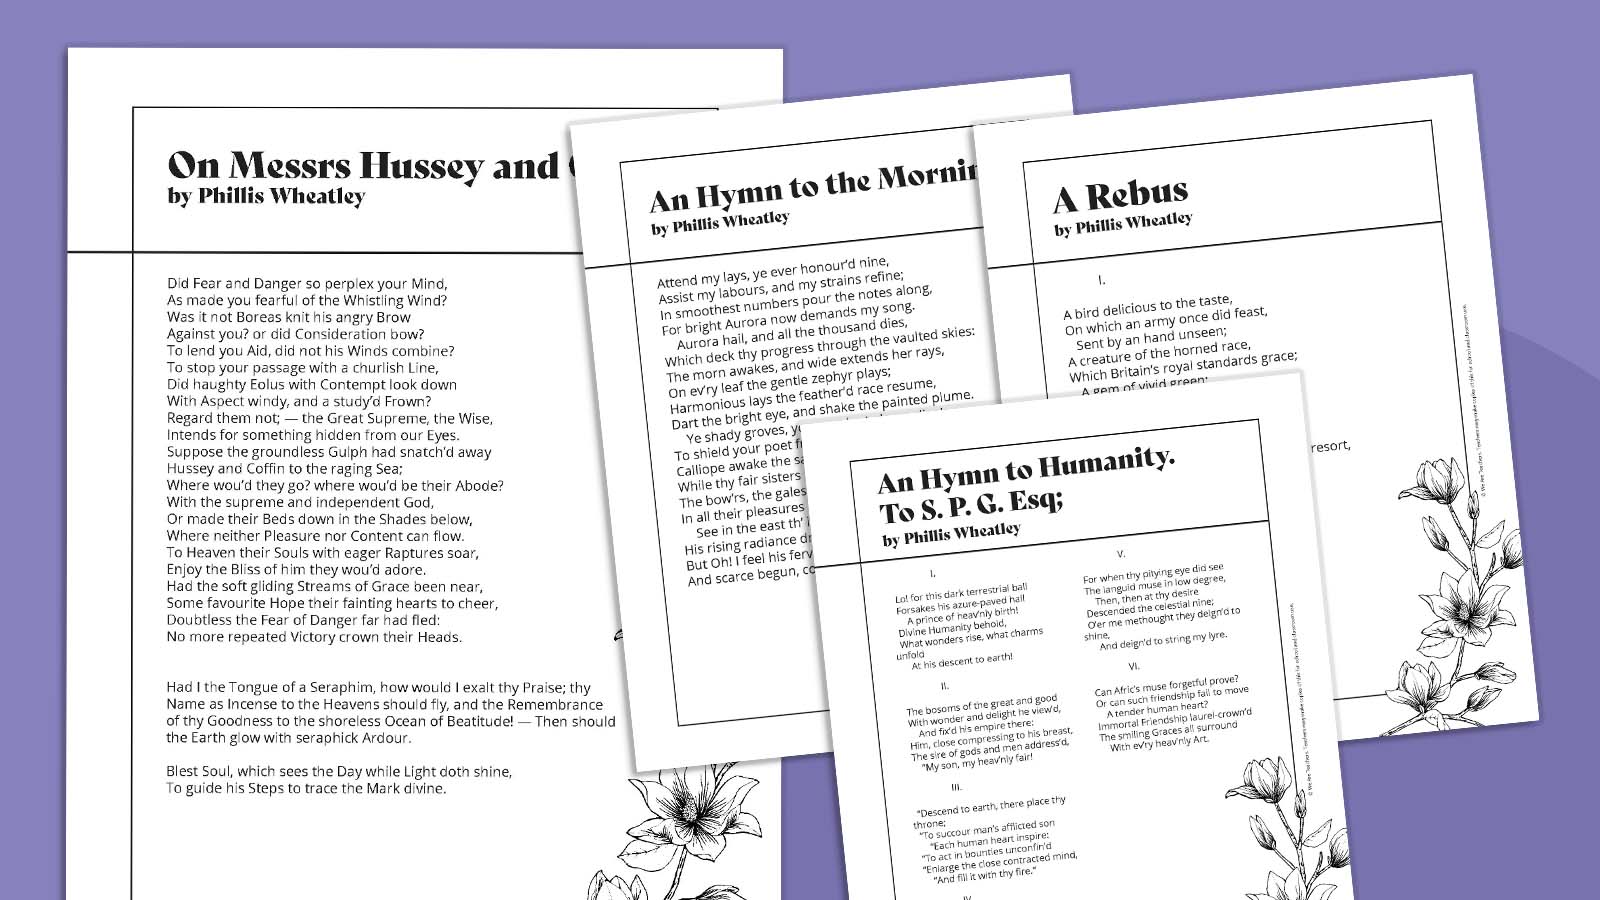 Printable Phillis Wheatley poems on a purple background.